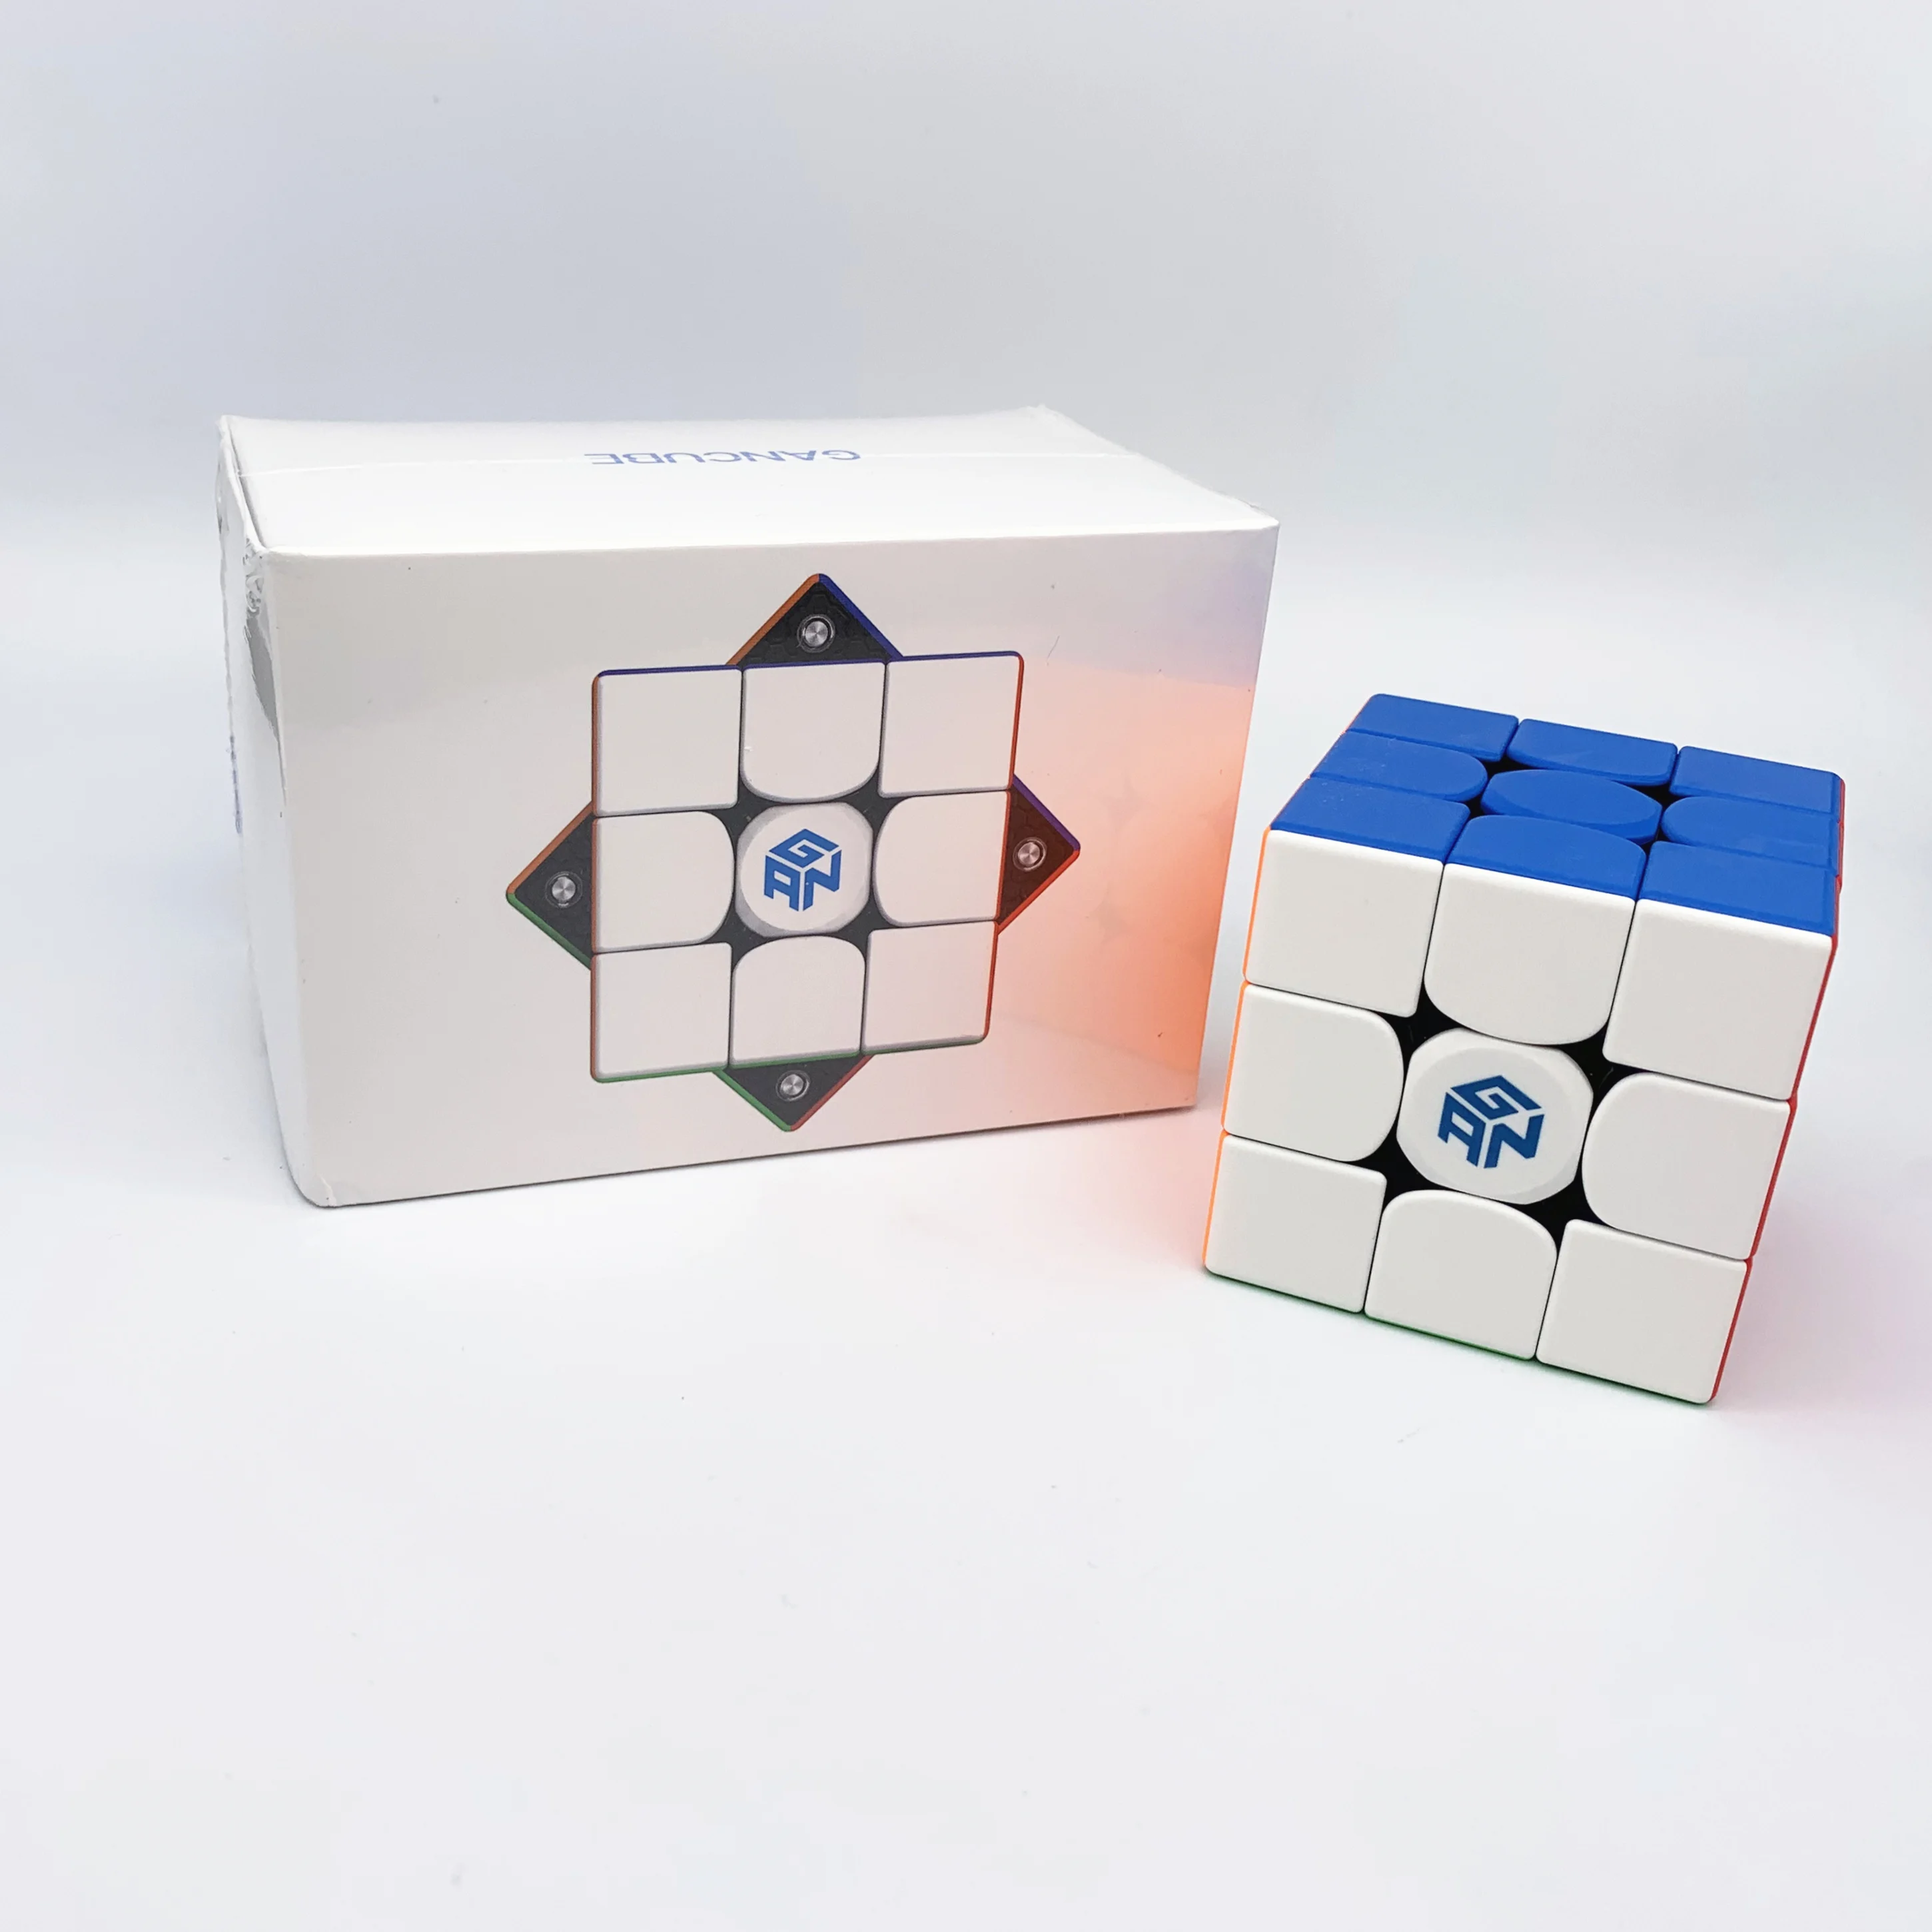 Professional Magic Cube 3x3x3, 3x3x3 High Speed Magic Cube